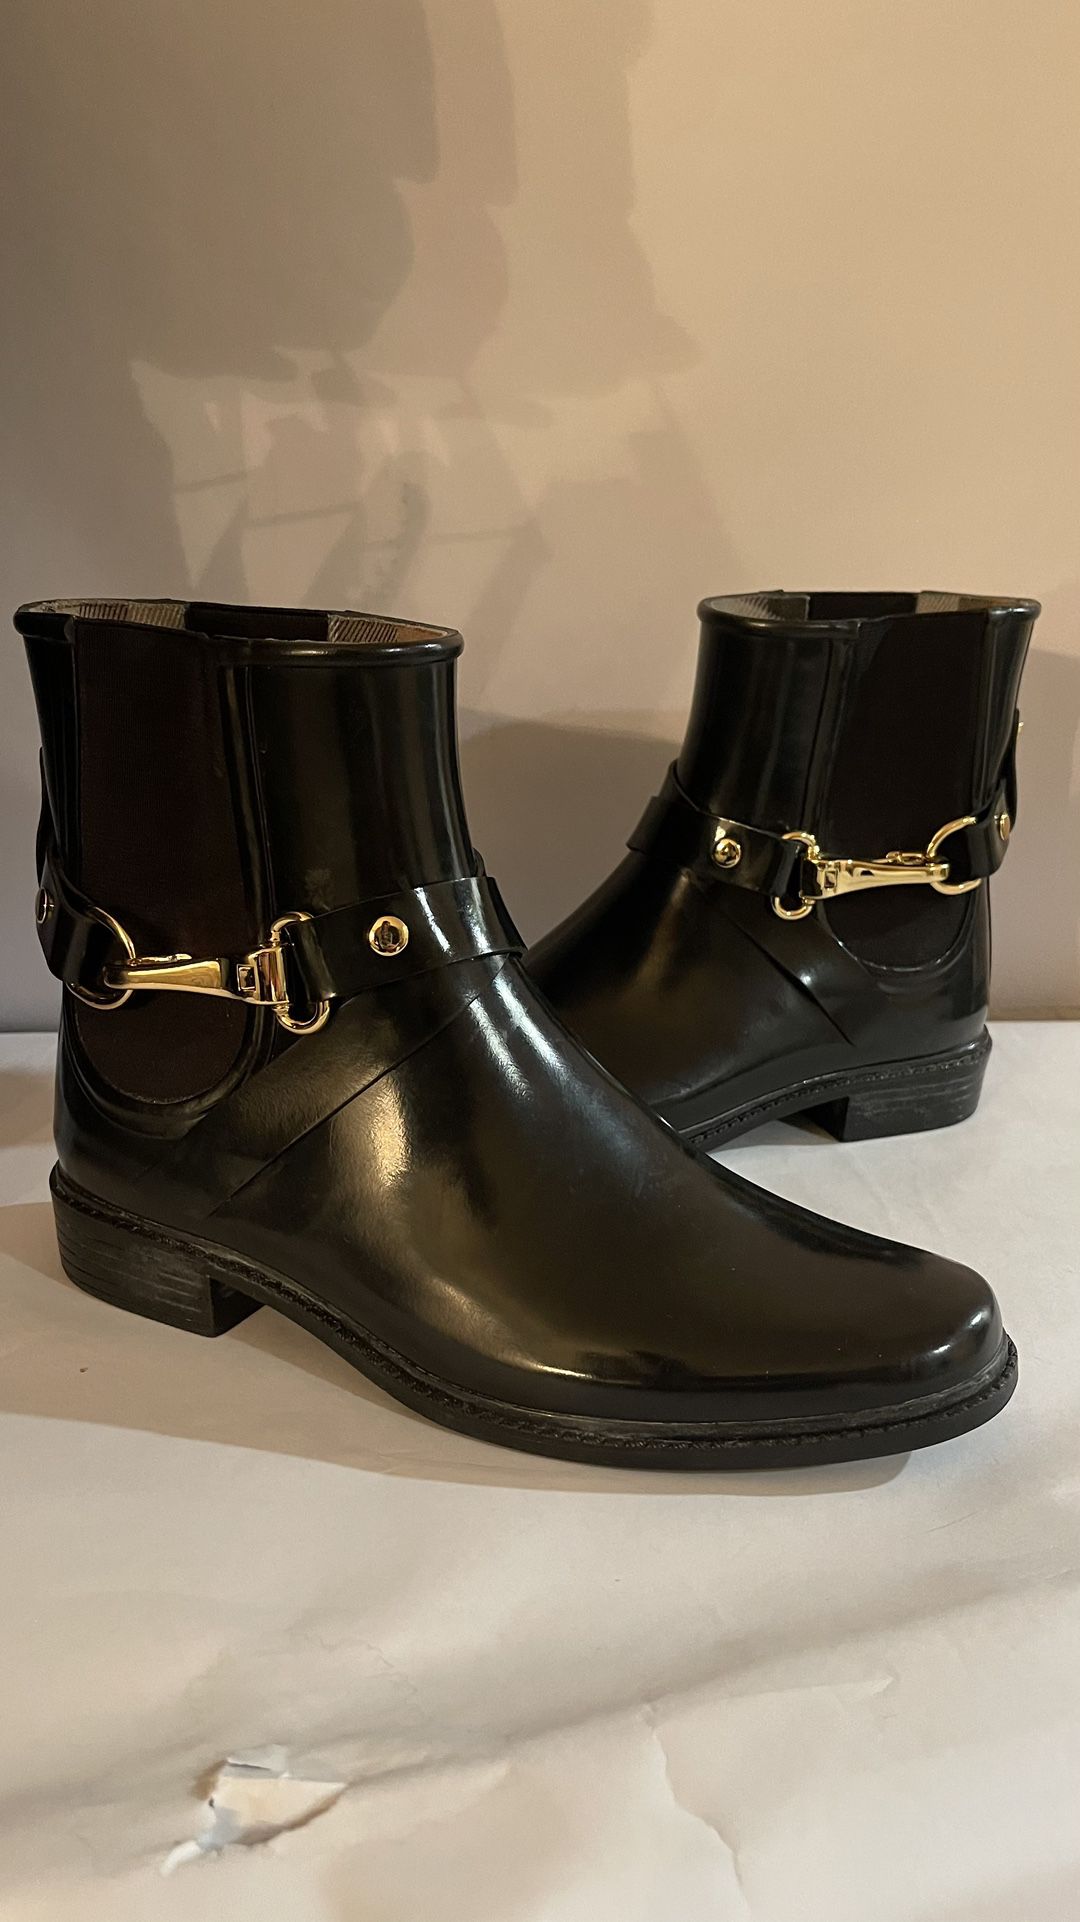 Burberry Ackmar Rain Boots Size 10